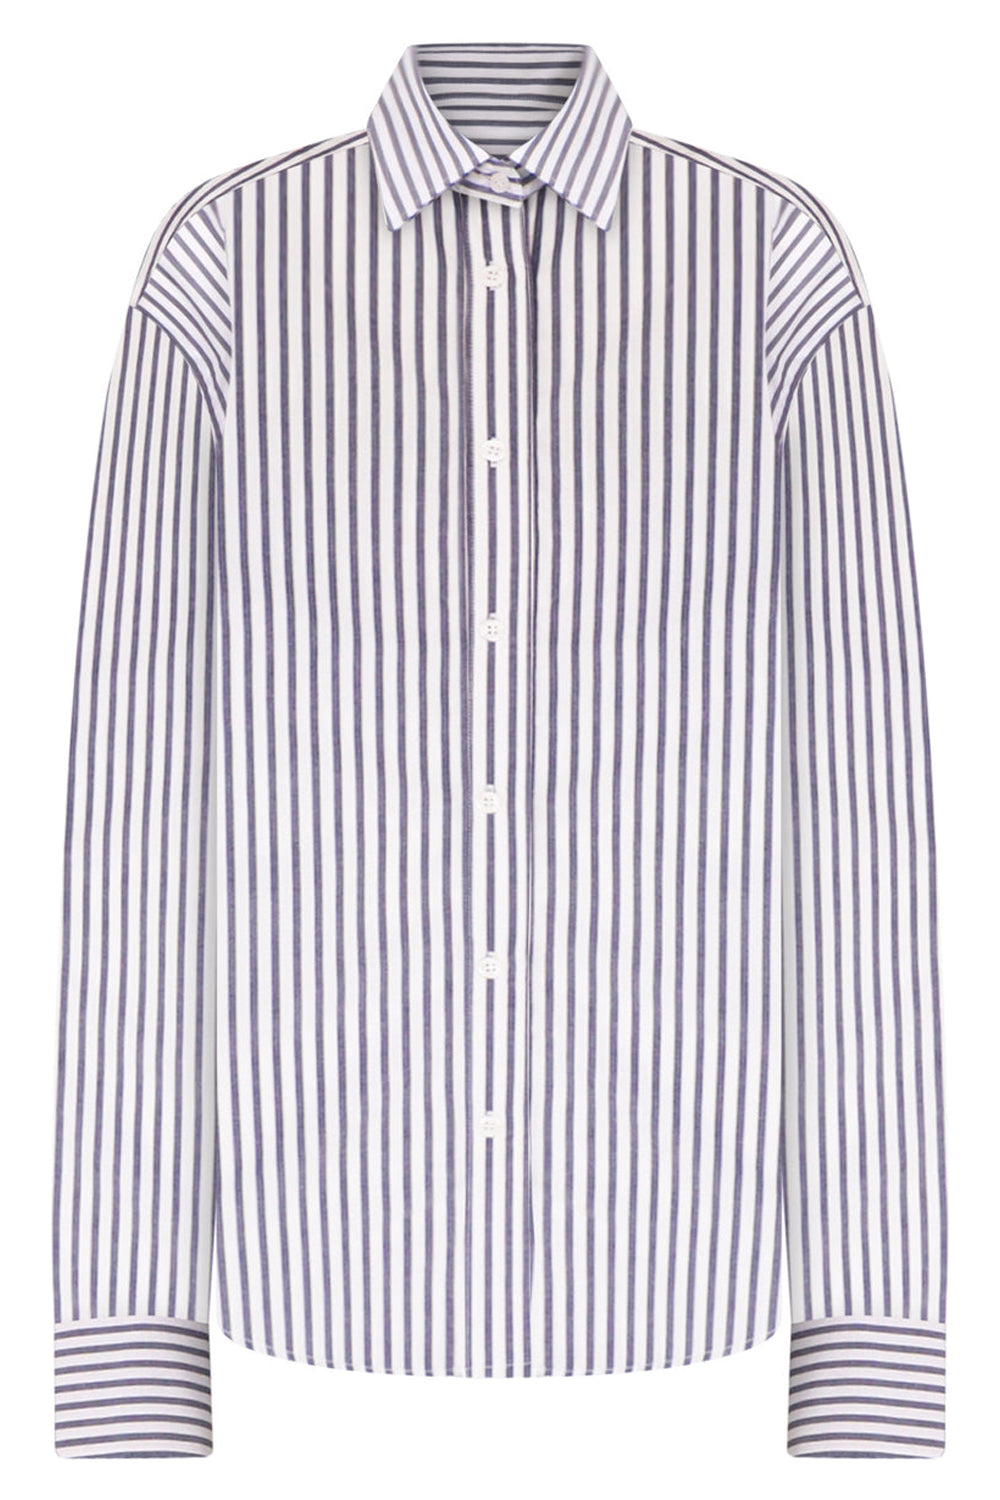 Filippa K - Striped Cotton Shirt in Pacific Blue and White Stripe